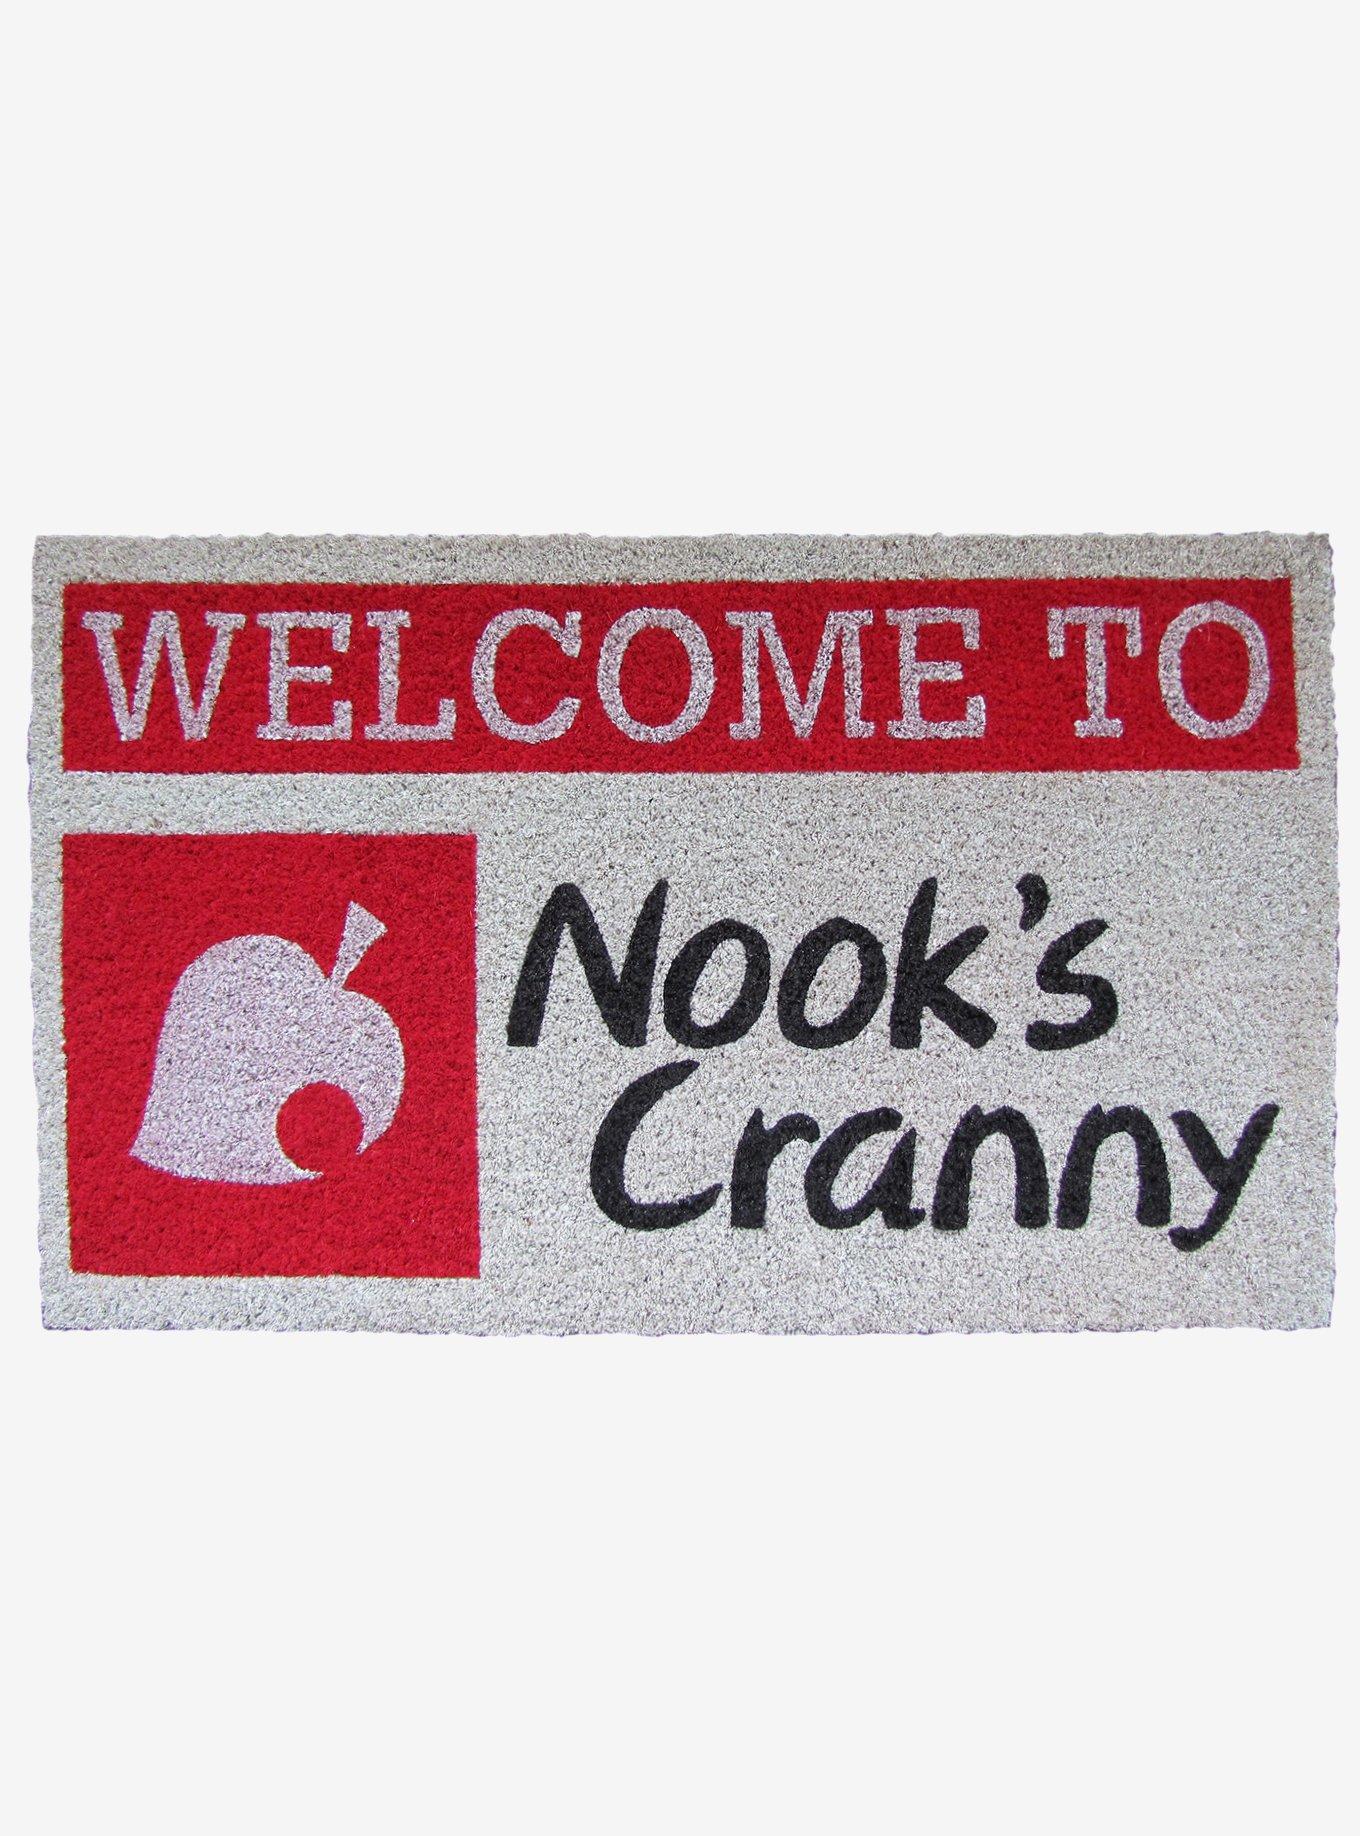 Animal Crossing: New Horizons Nook's Cranny Doormat, , hi-res